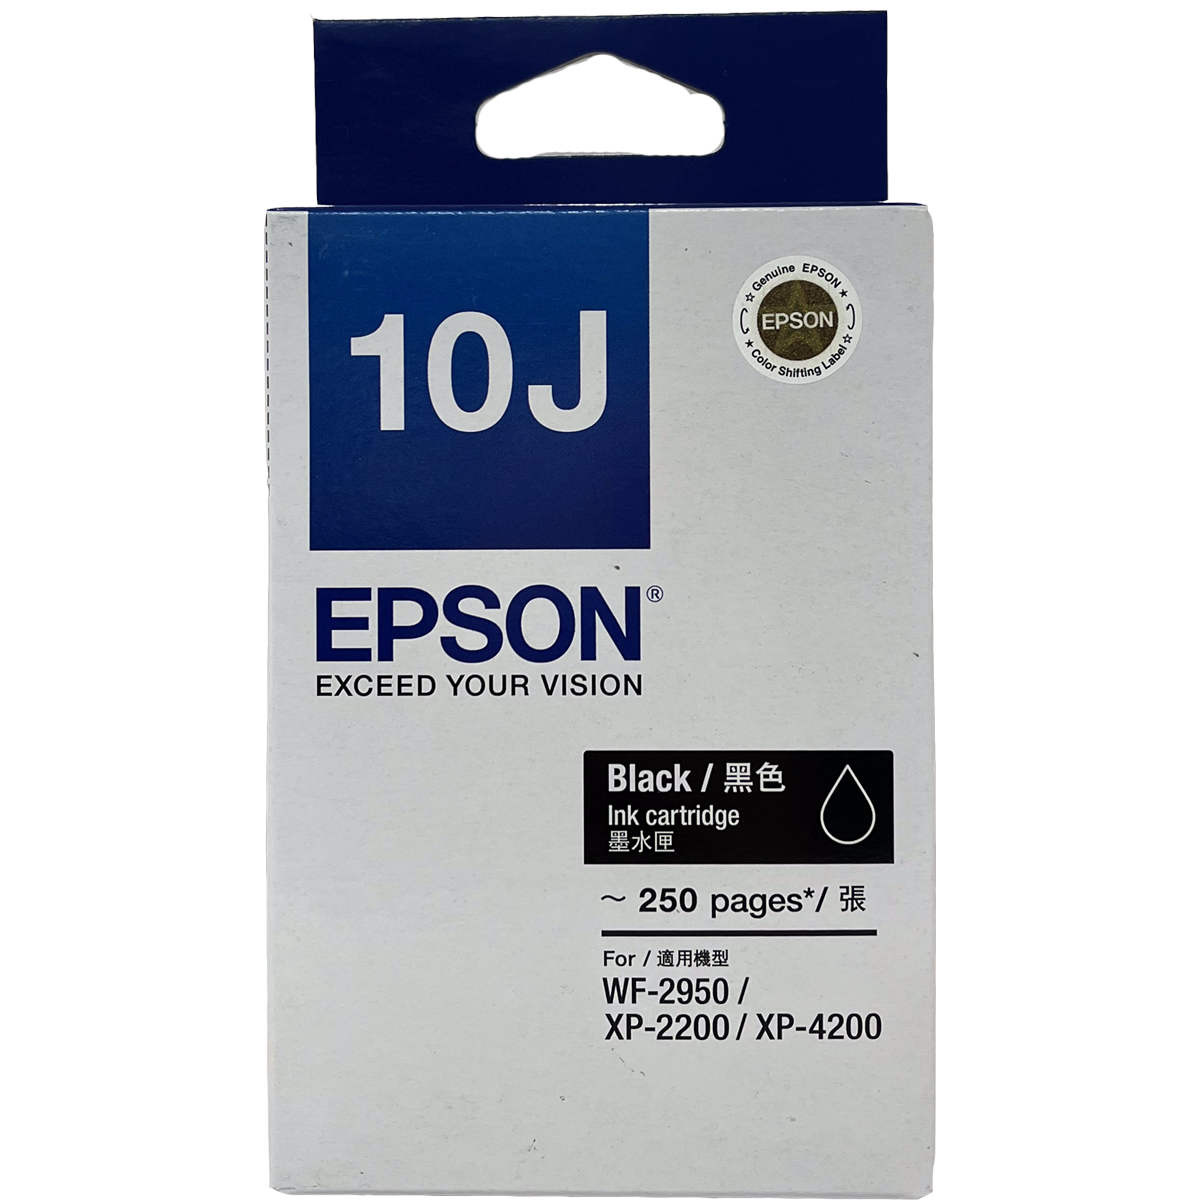 Epson 10J Black Ink Cartridge #C13T10J183